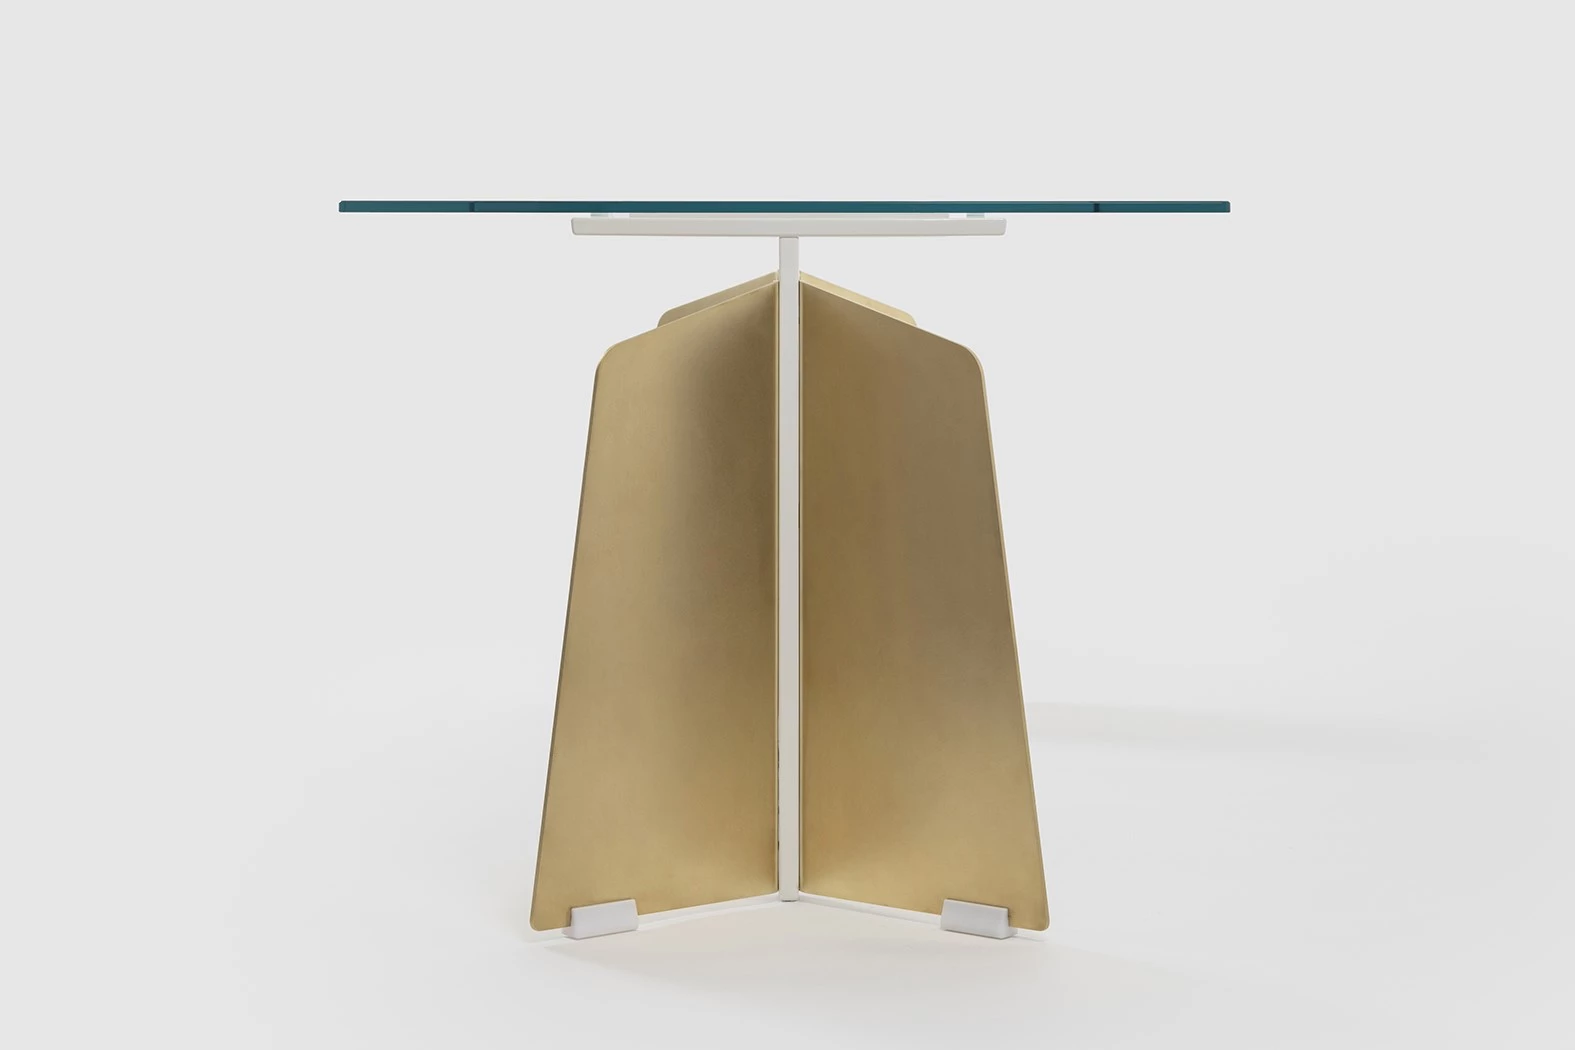 Starblade table - Jean-Baptiste Fastrez - Table - Galerie kreo